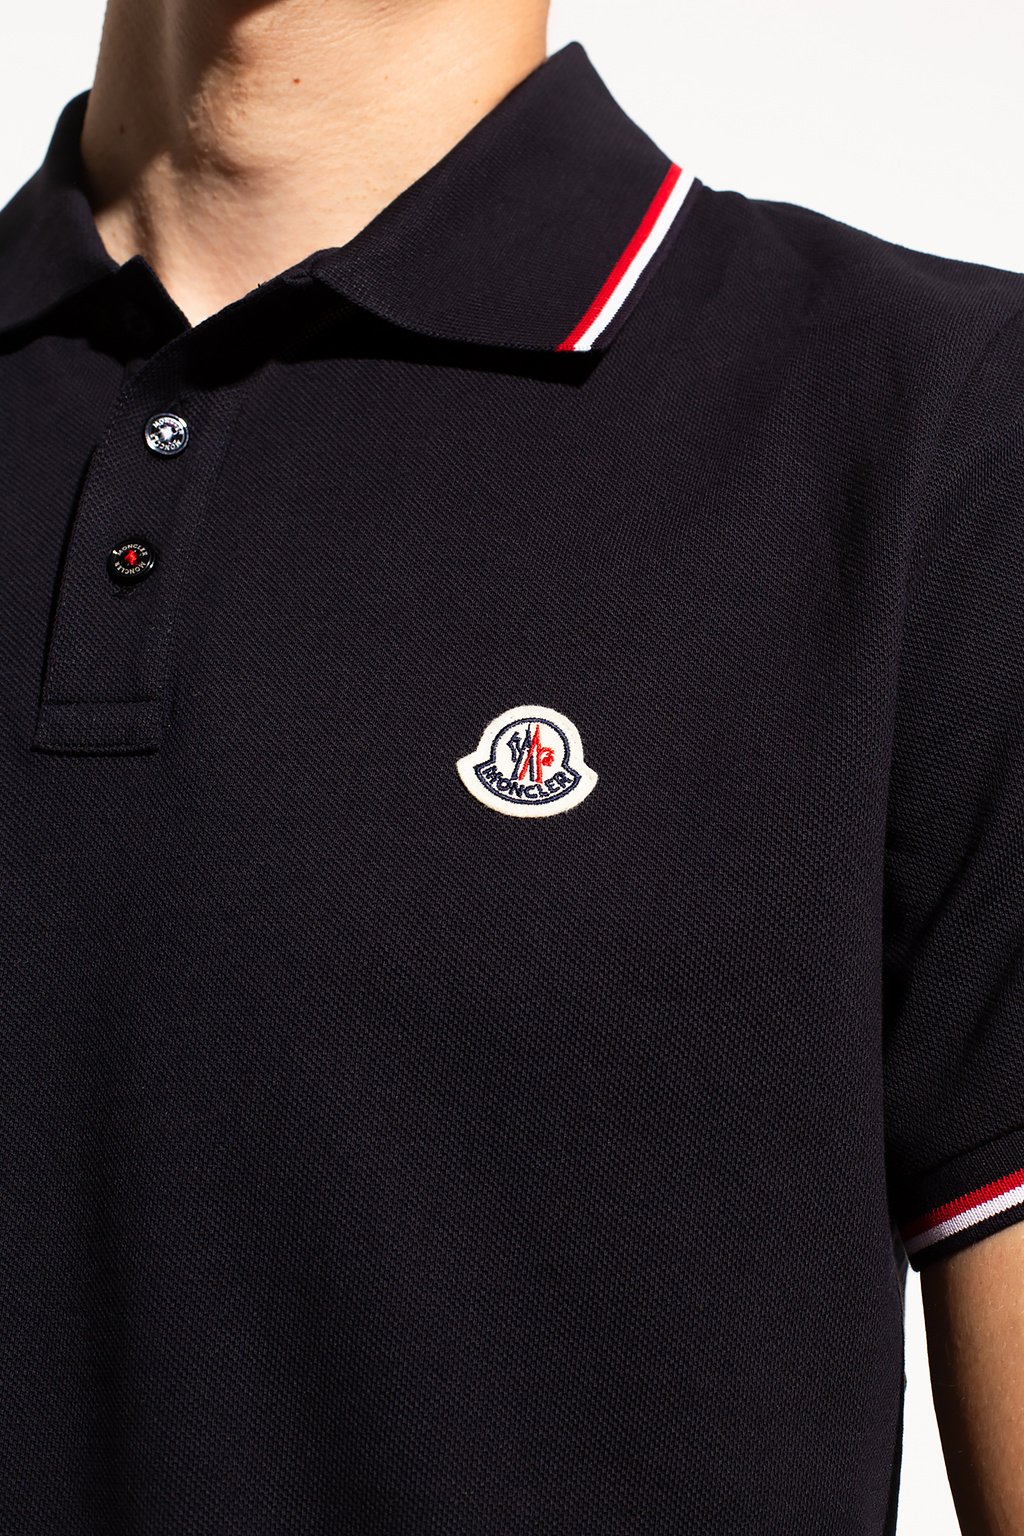 Stripe-detail polo shirt Farfetch Kleidung Tops & Shirts Shirts Poloshirts 